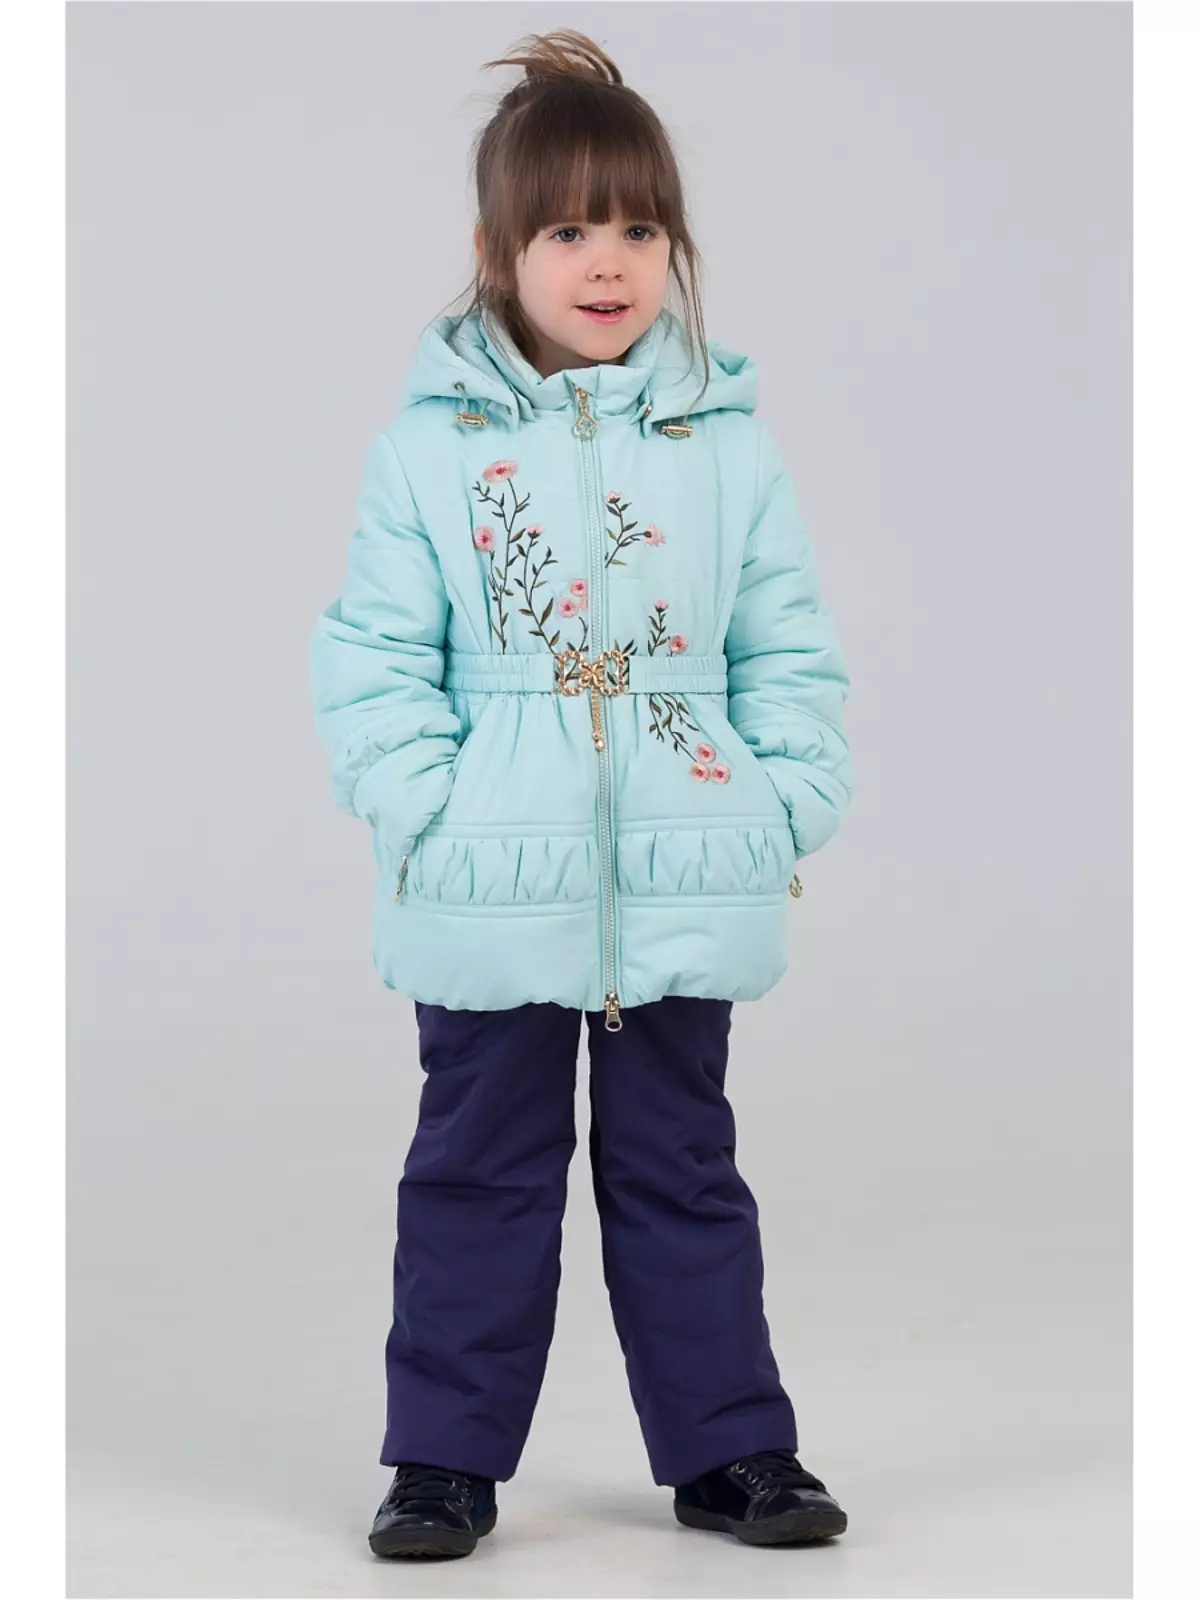 BILMI (38 fotos): Roupa infantil, kits de inverno e globos, impermeables e chaquetas, comentarios de marca 3802_18